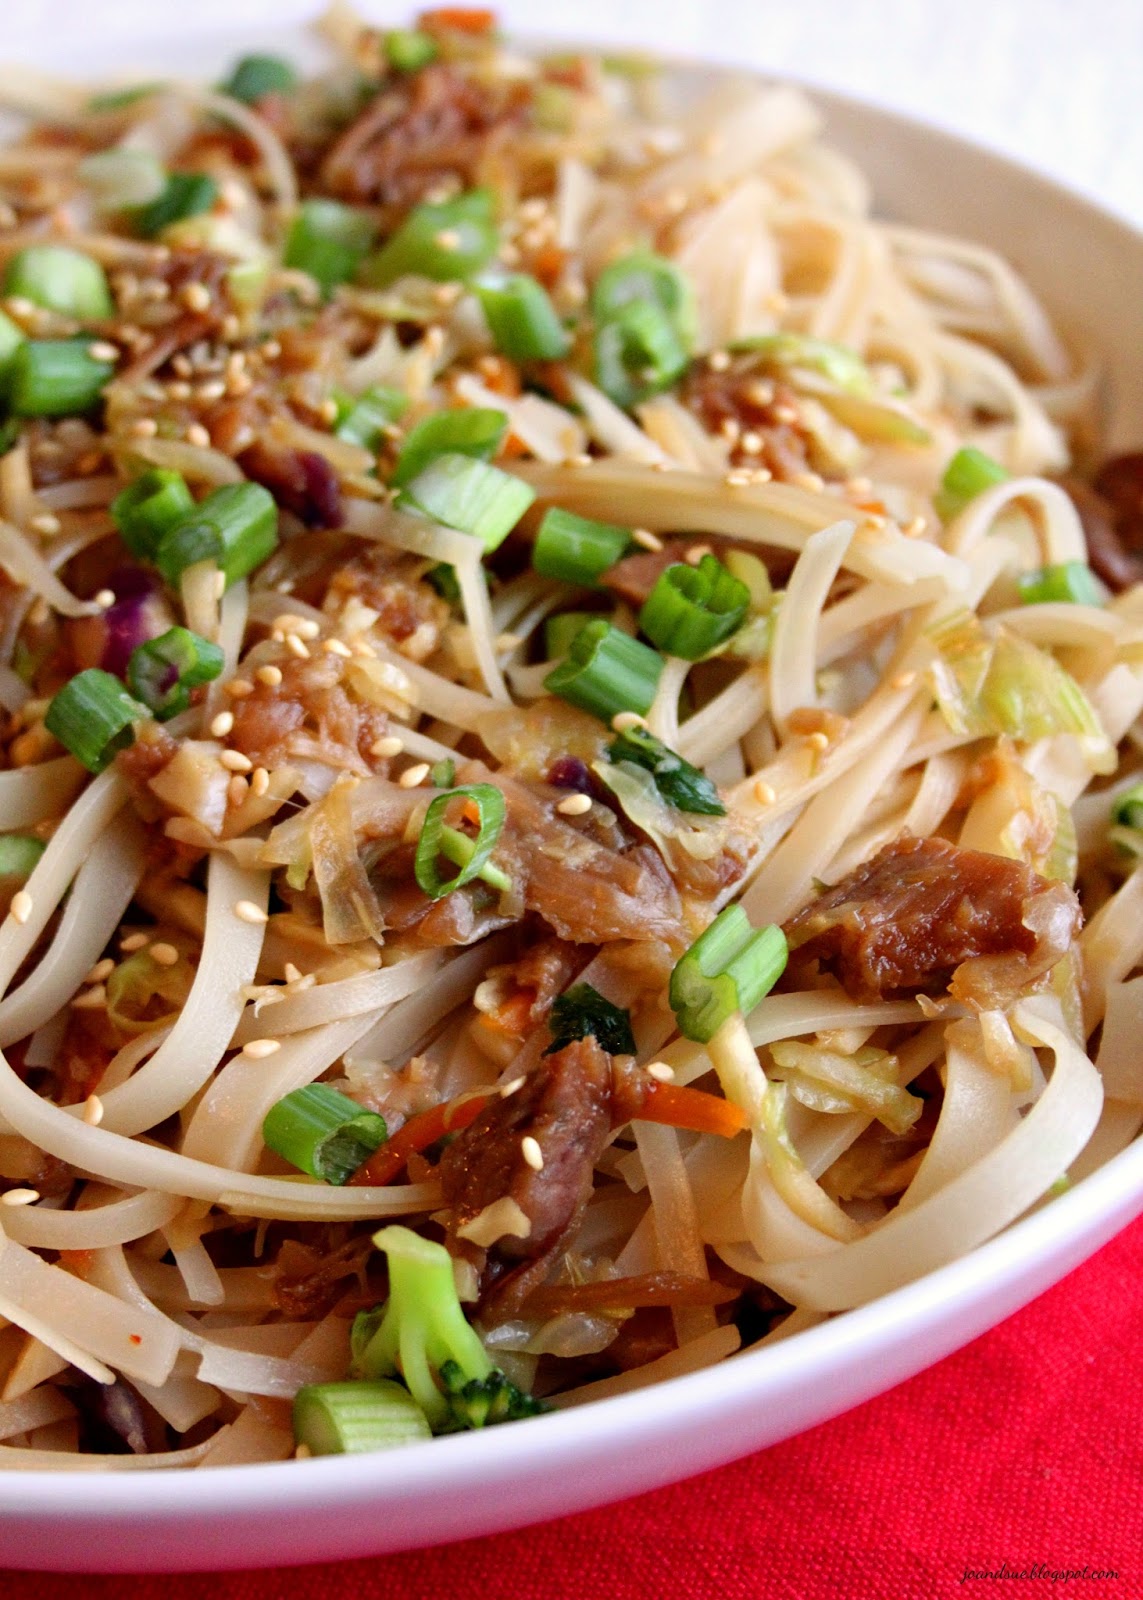 Jo and Sue: Vegan Mongolian "Beef" Noodles